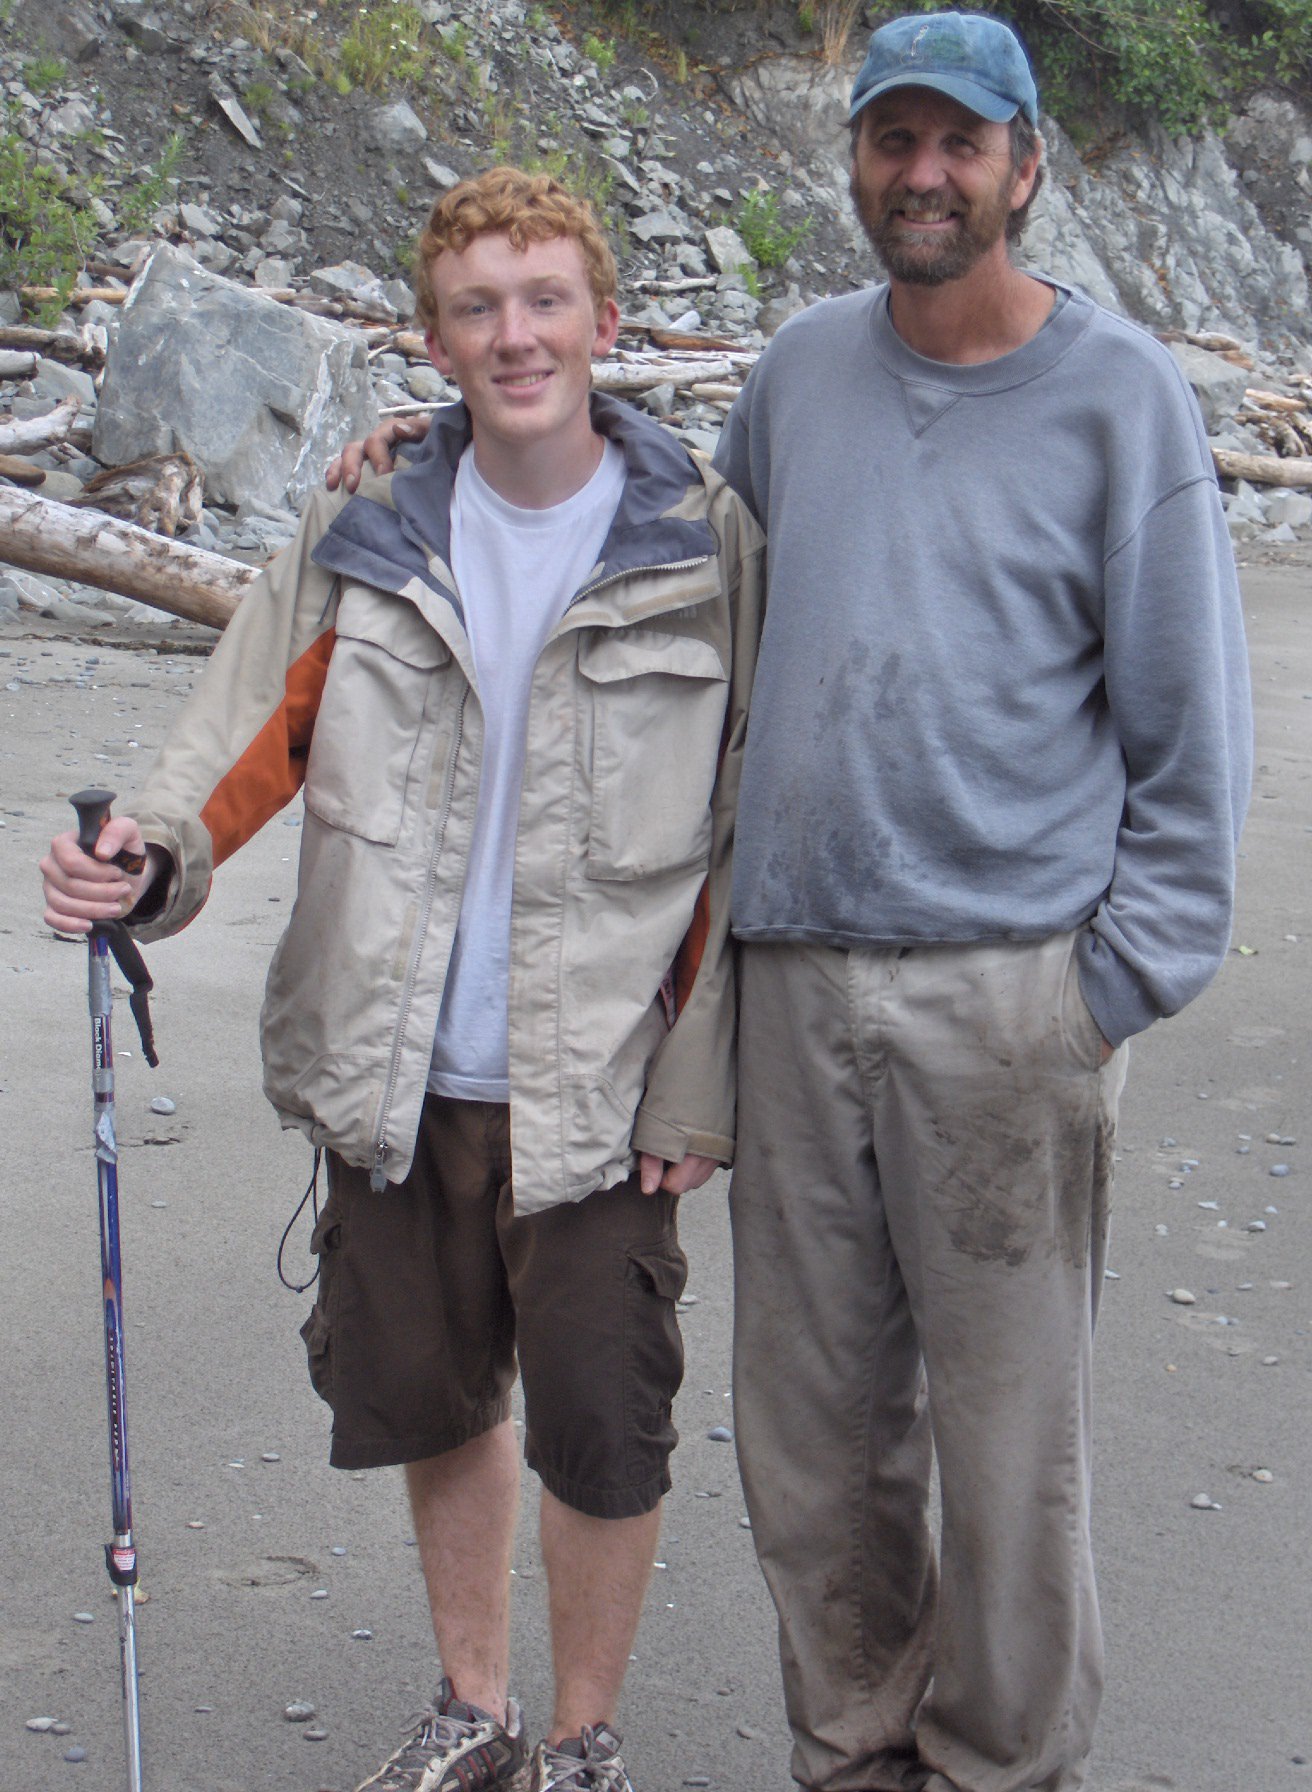 My dad and I on the Washington coast